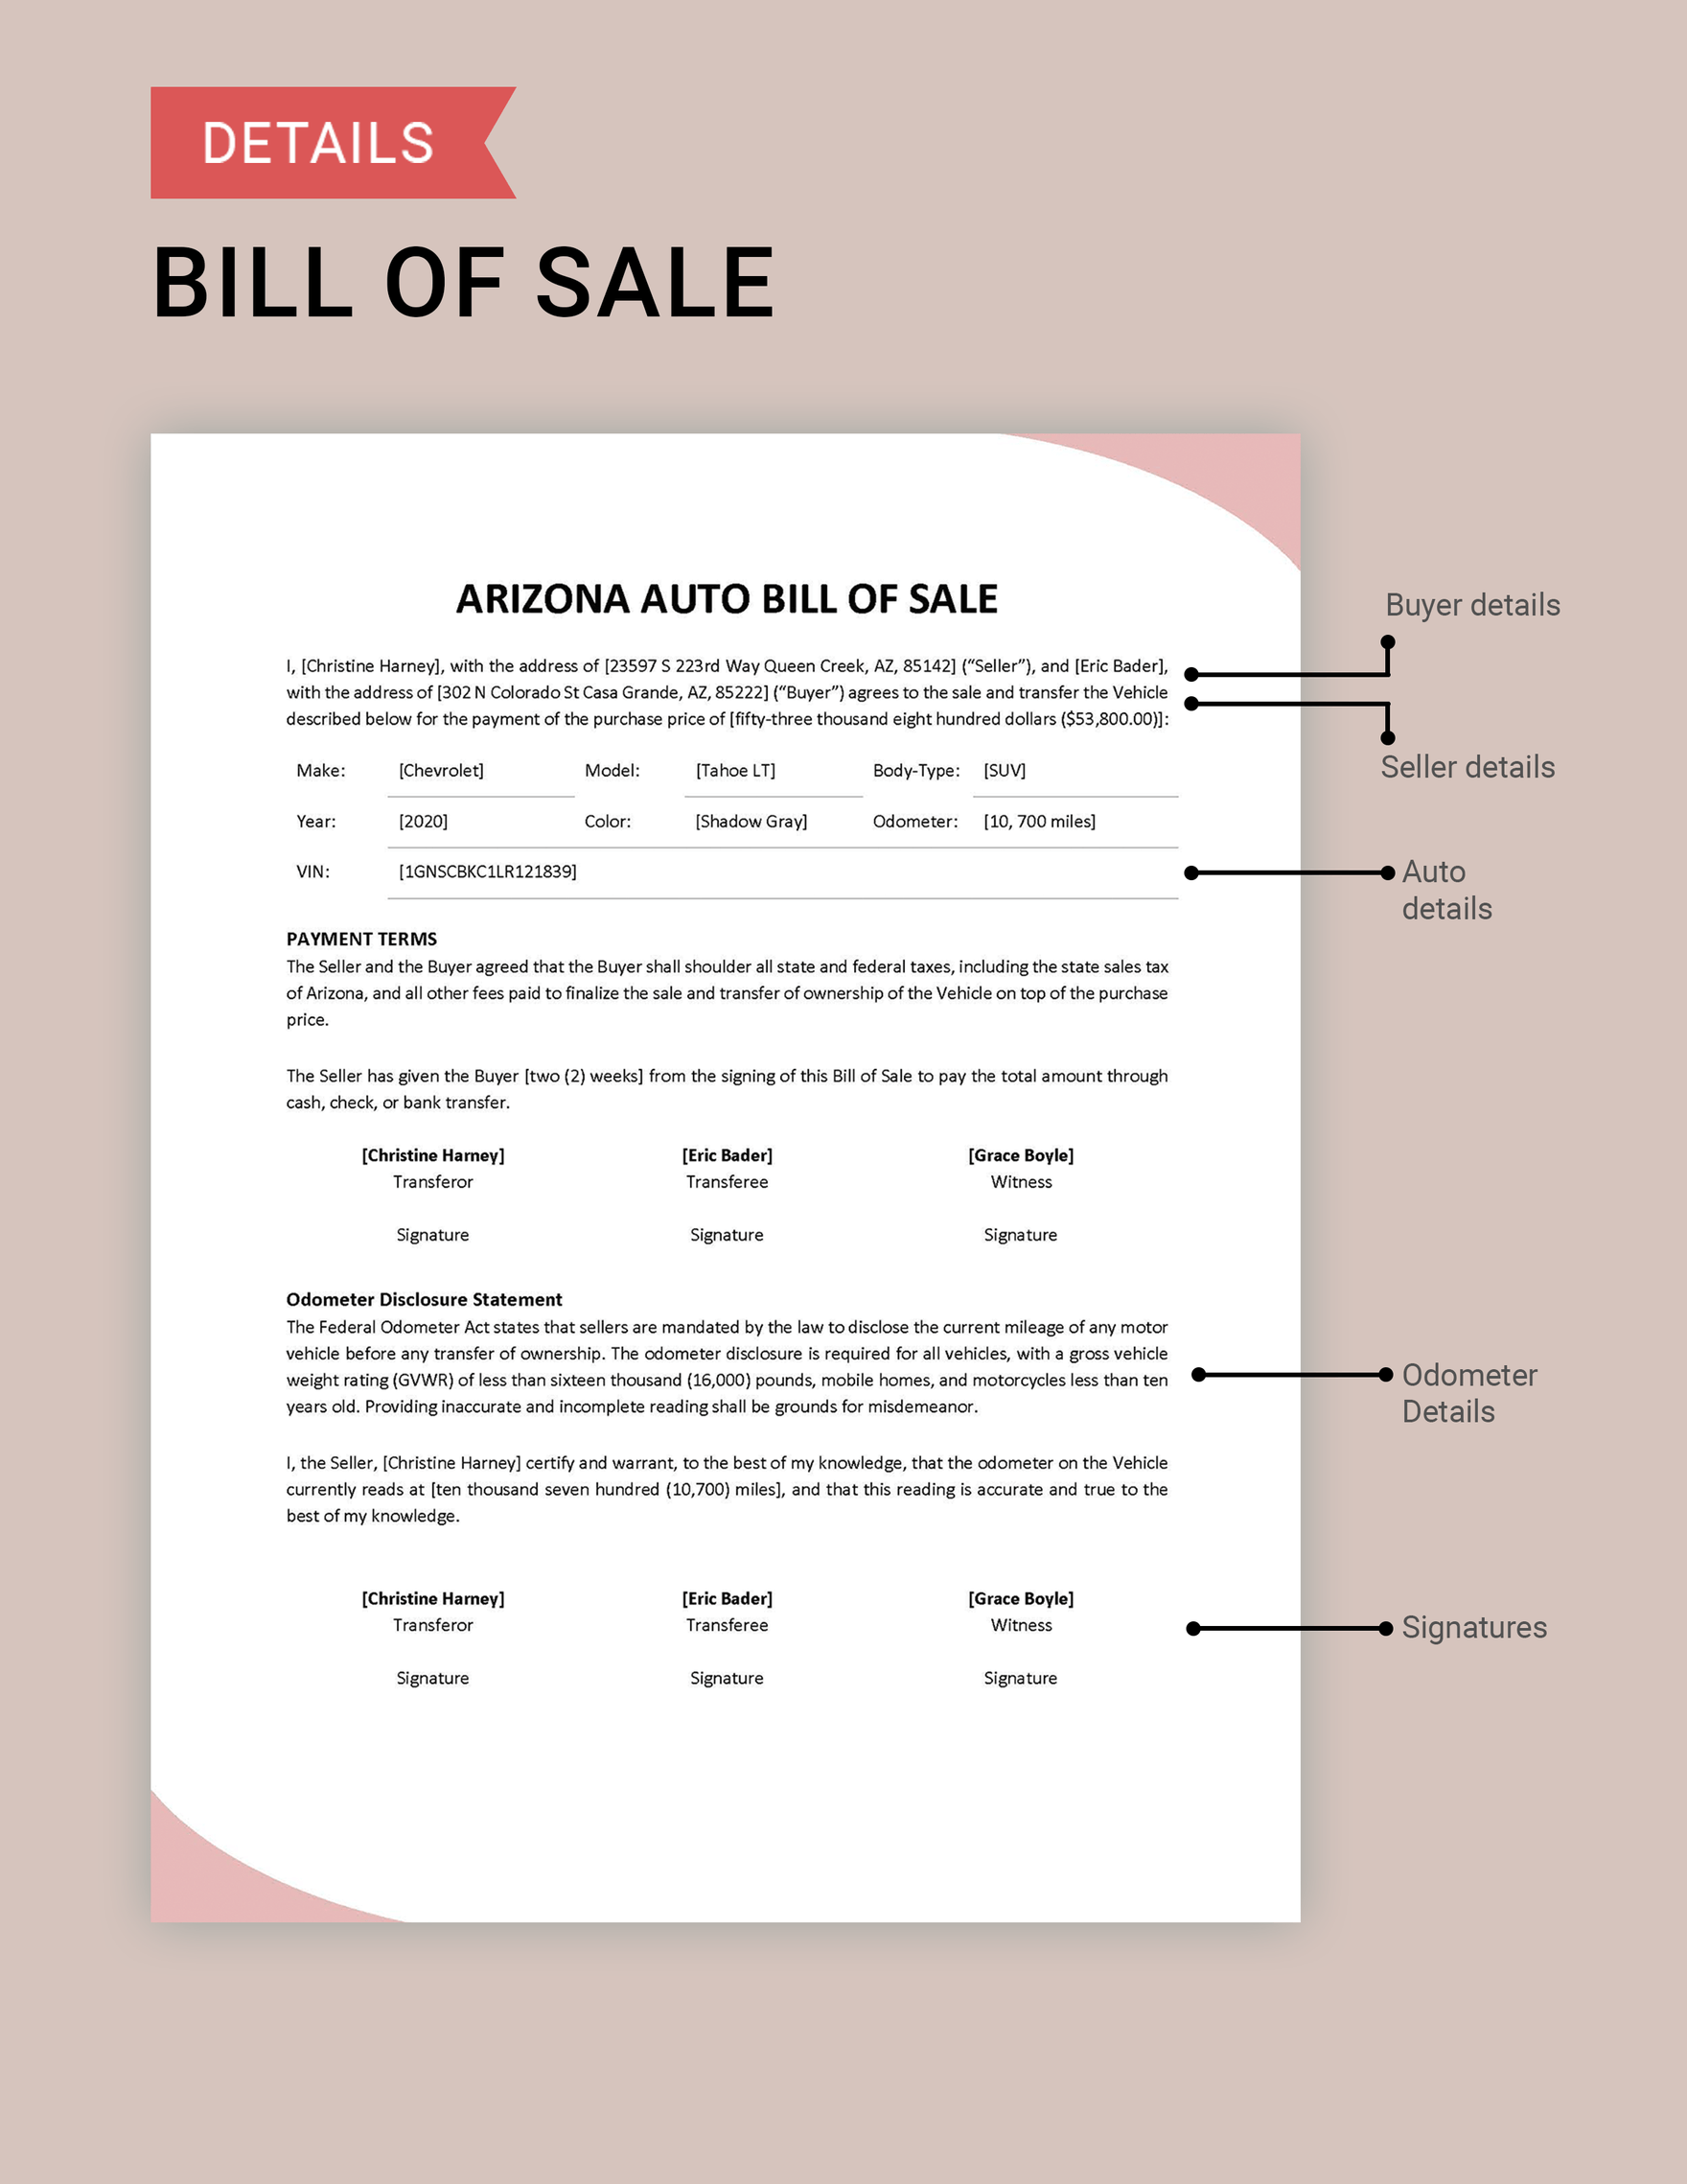 Arizona Auto Bill of Sale Template